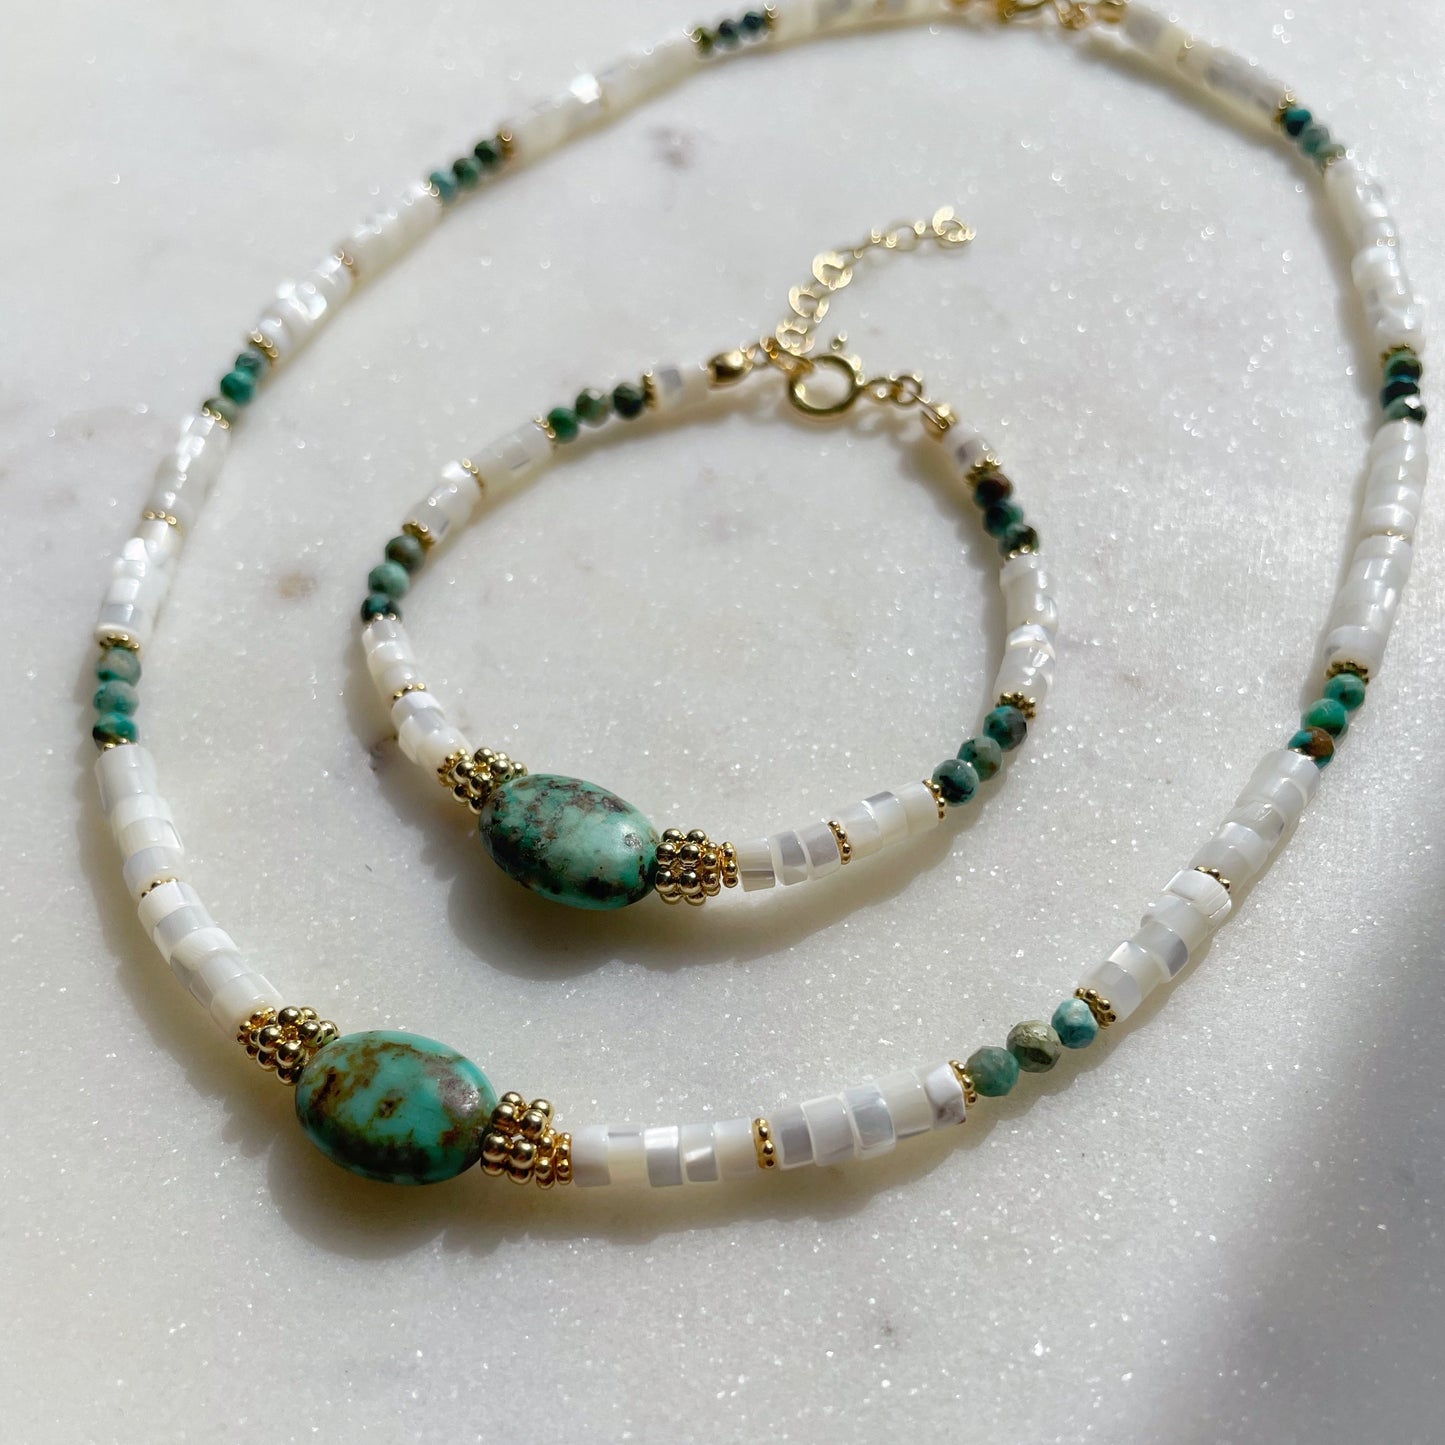 Ezili necklace & bracelet set